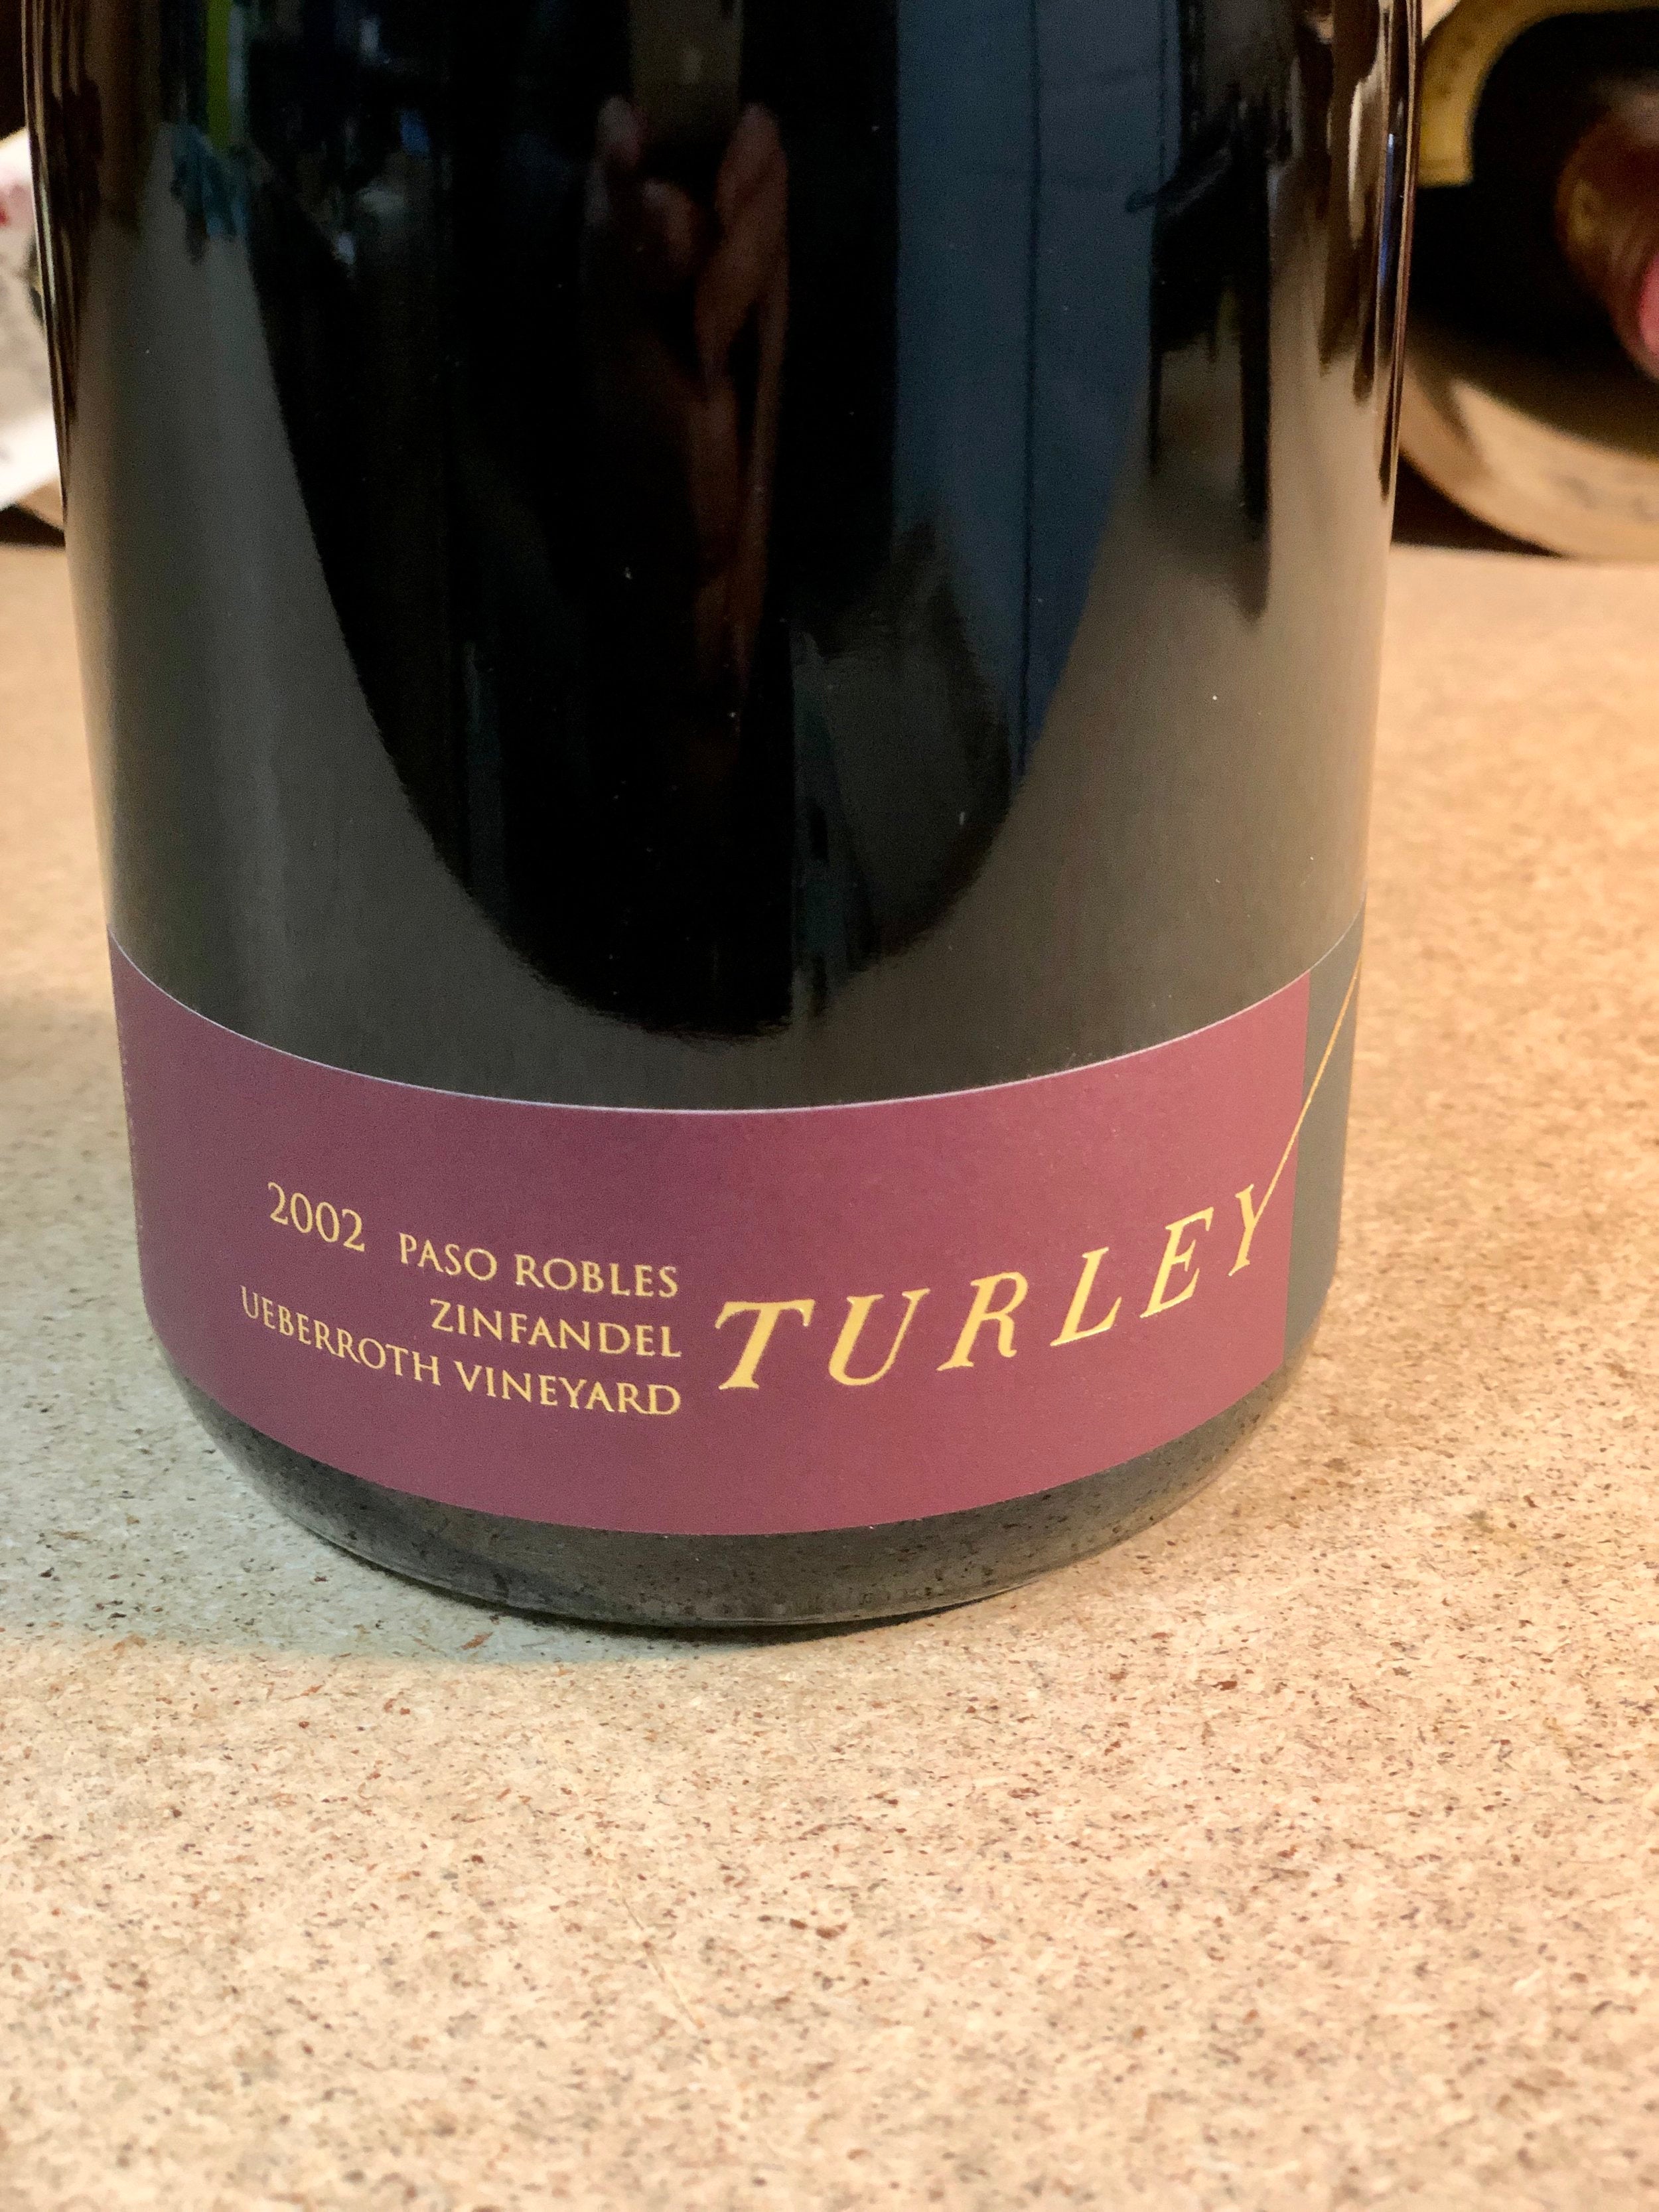 Turley, Paso Robles, Ueberroth Vineyard, Zinfandel 2002